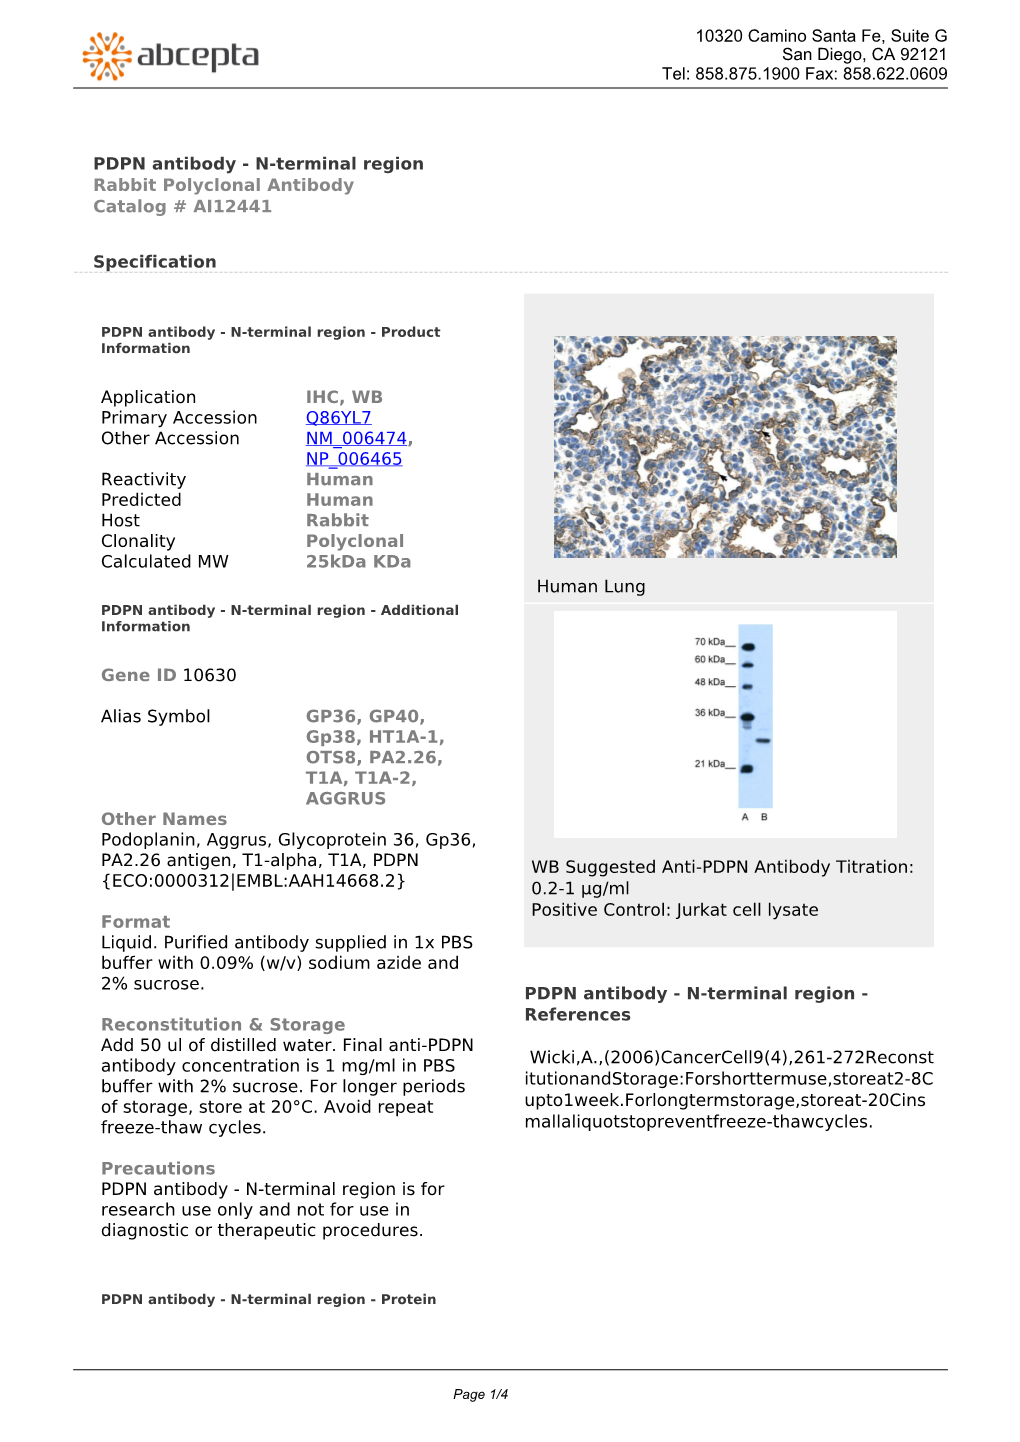 PDPN Antibody - N-Terminal Region Rabbit Polyclonal Antibody Catalog # AI12441